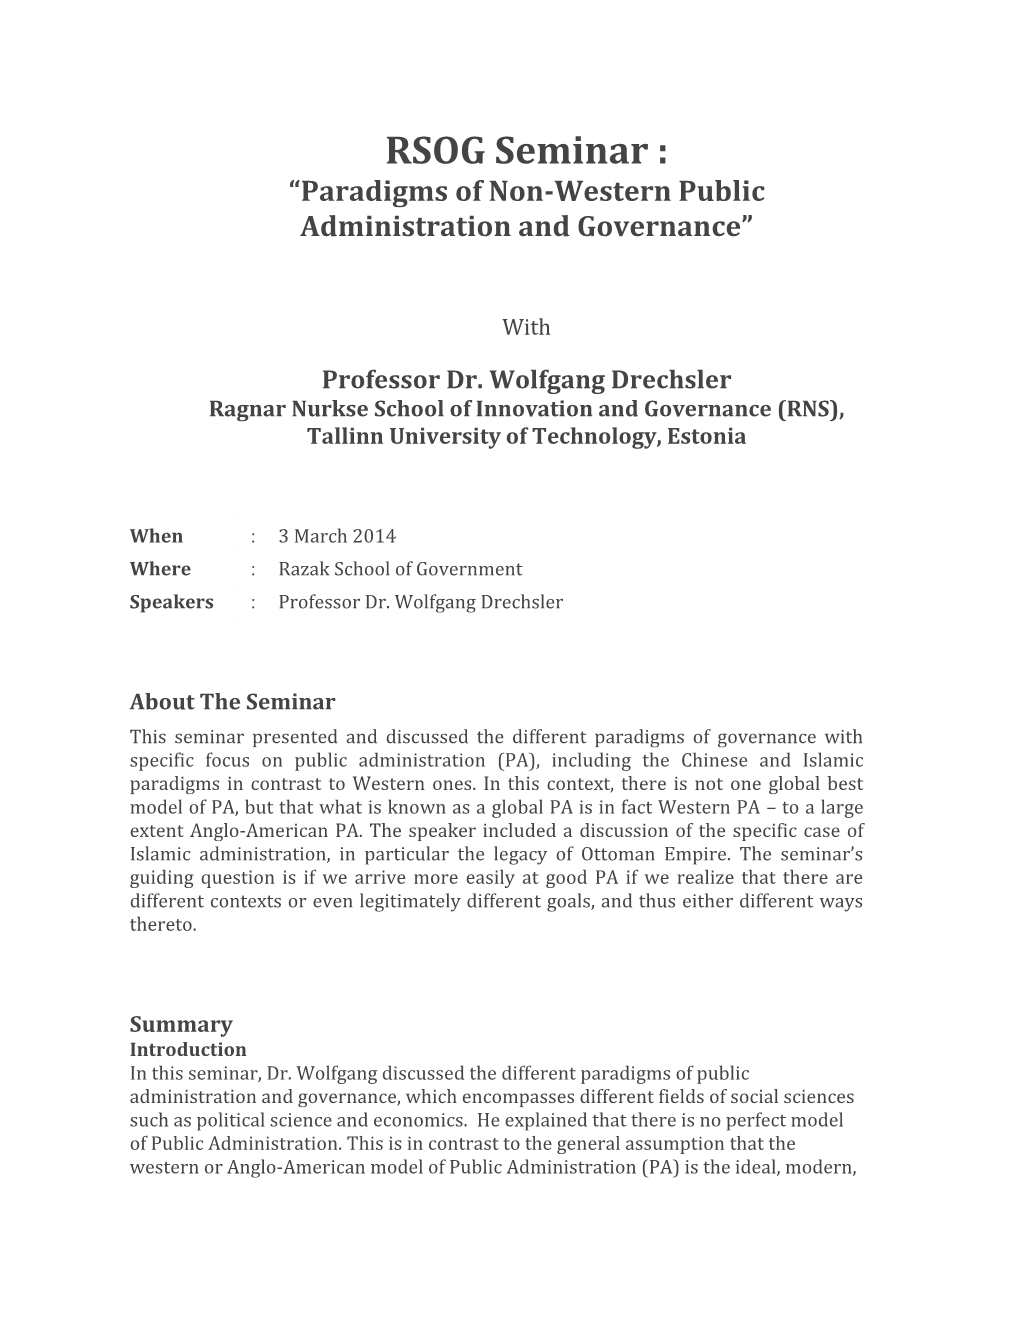 RSOG Seminar : “Paradigms of Non-Western Public Administration and Governance”